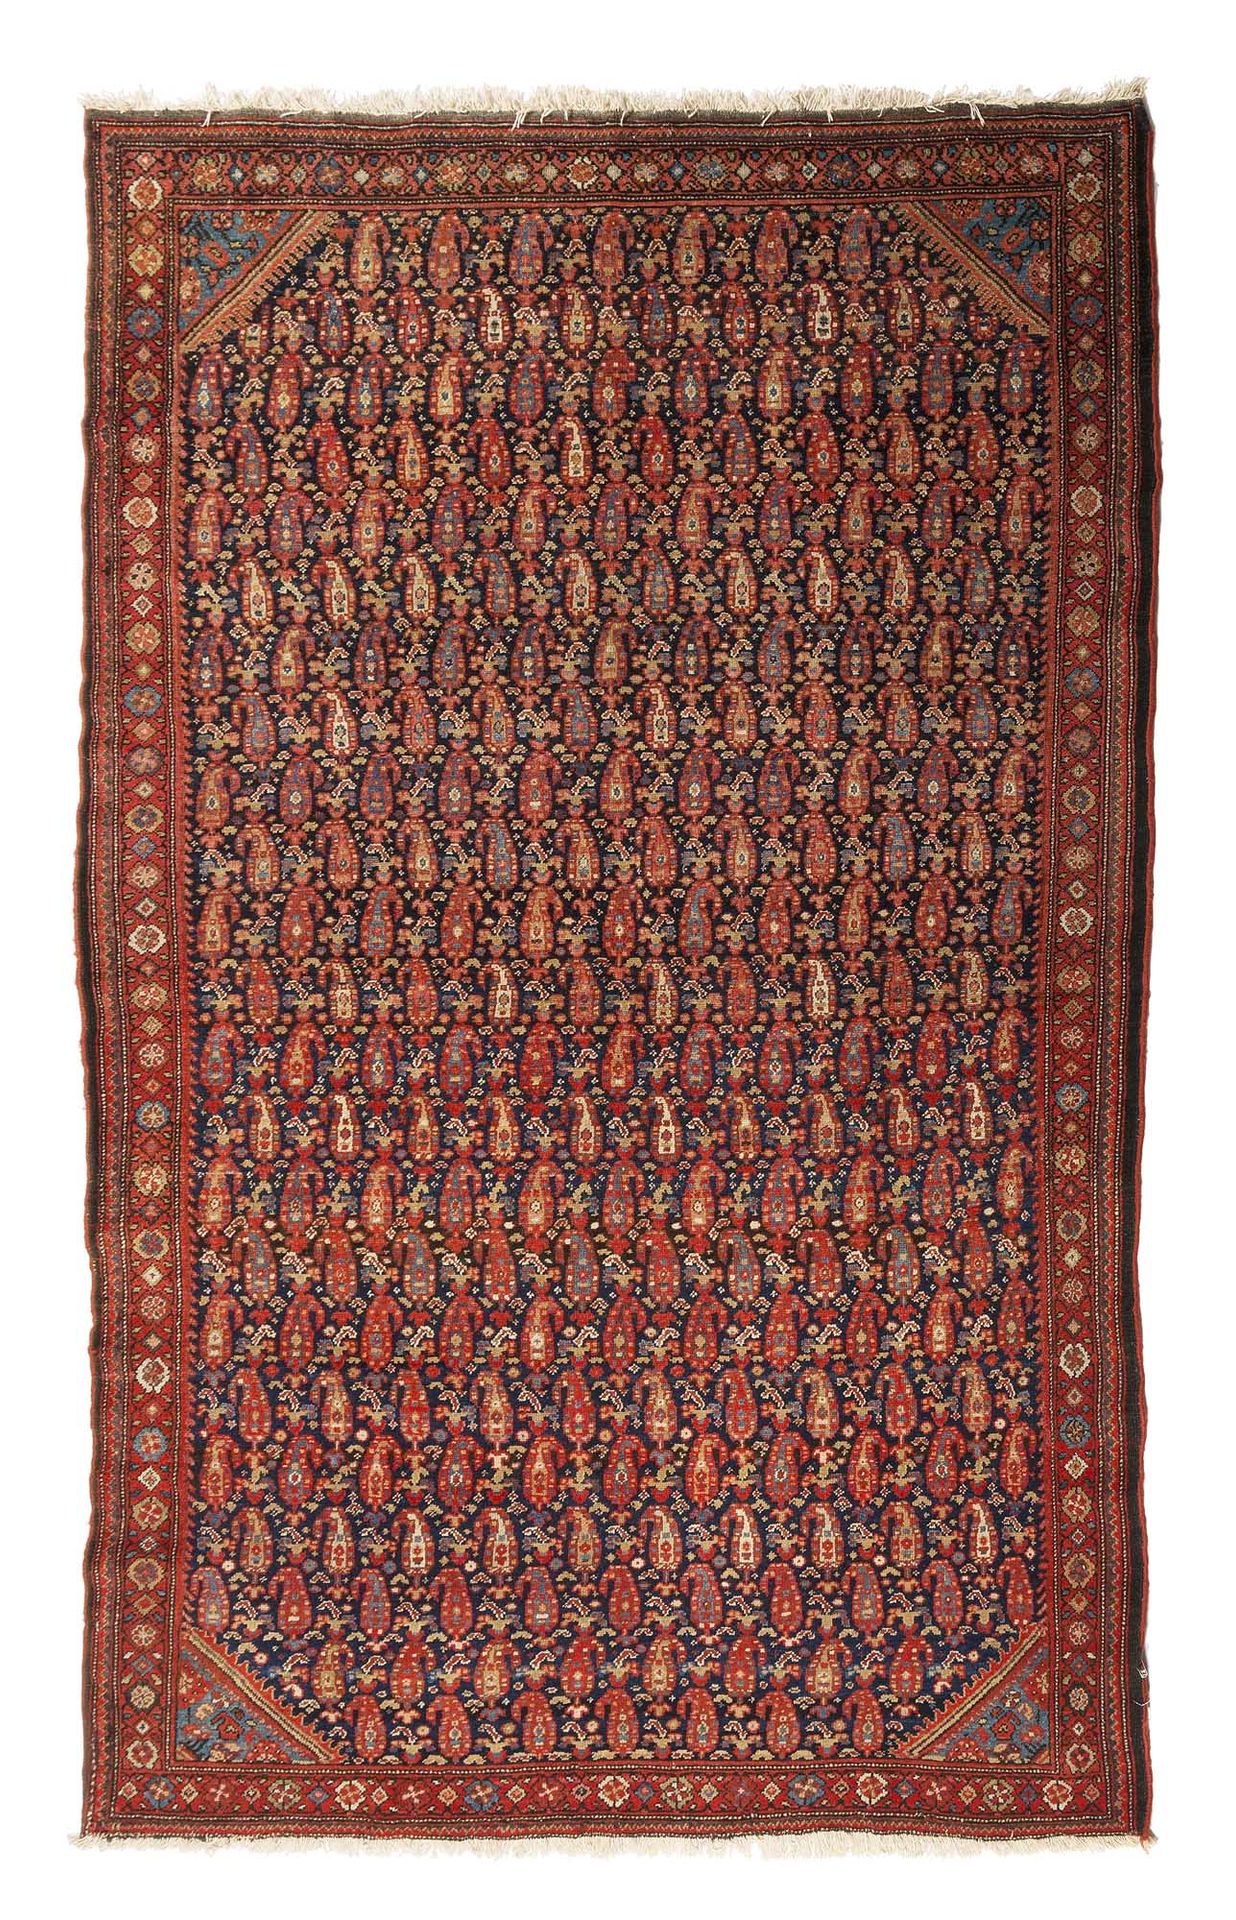 Null MELAYER carpet (Persia), late 19th century

Dimensions : 195 x 120cm

Techn&hellip;